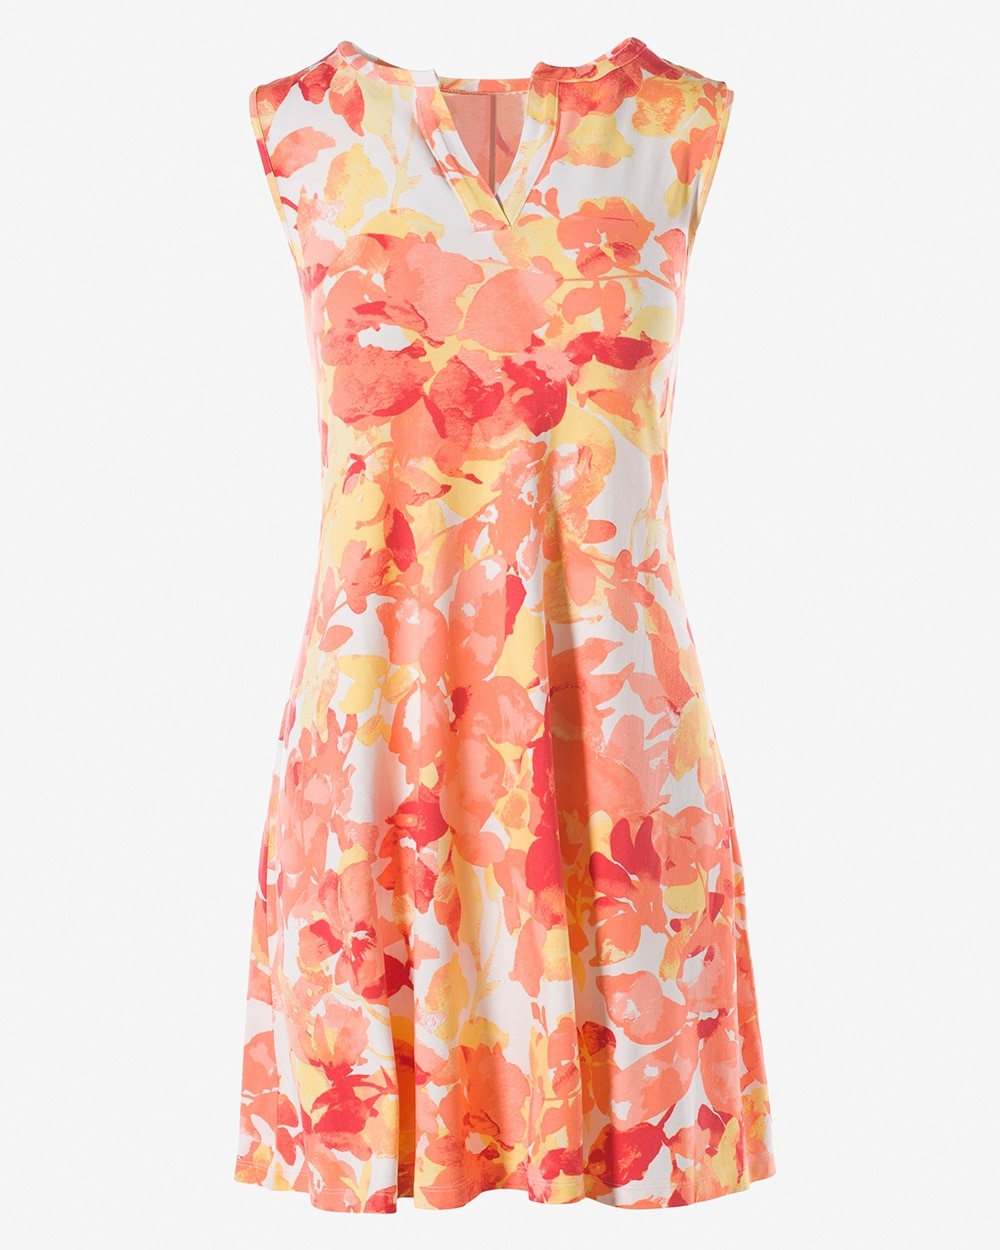 Spectrum Floral Knee-Length Dress